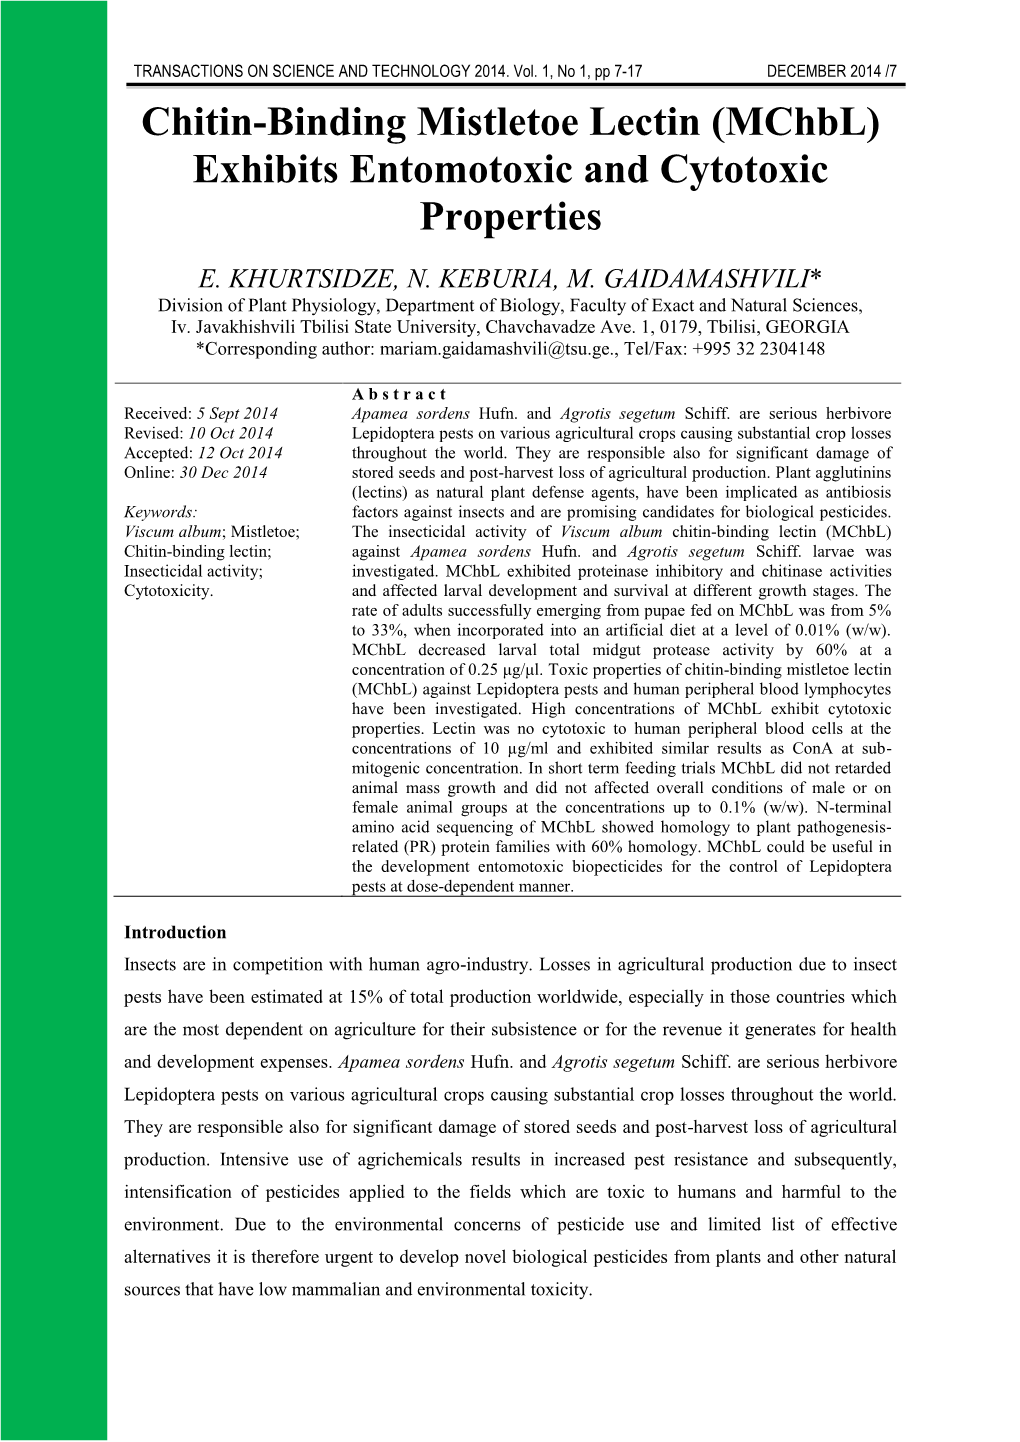 Chitin-Binding Mistletoe Lectin (Mchbl) Exhibits Entomotoxic and Cytotoxic Properties